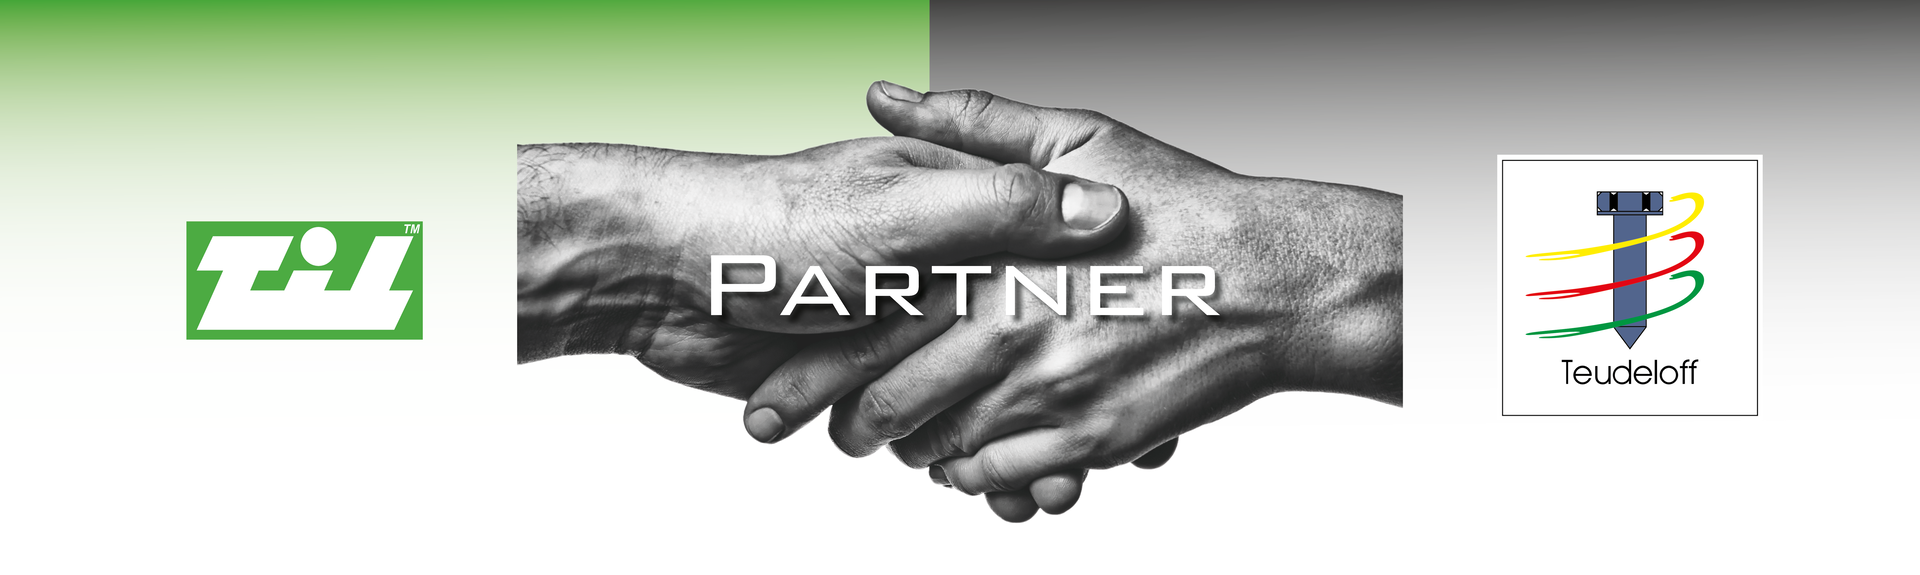 Partners: TiL and Teudeloff - Logos shake hands